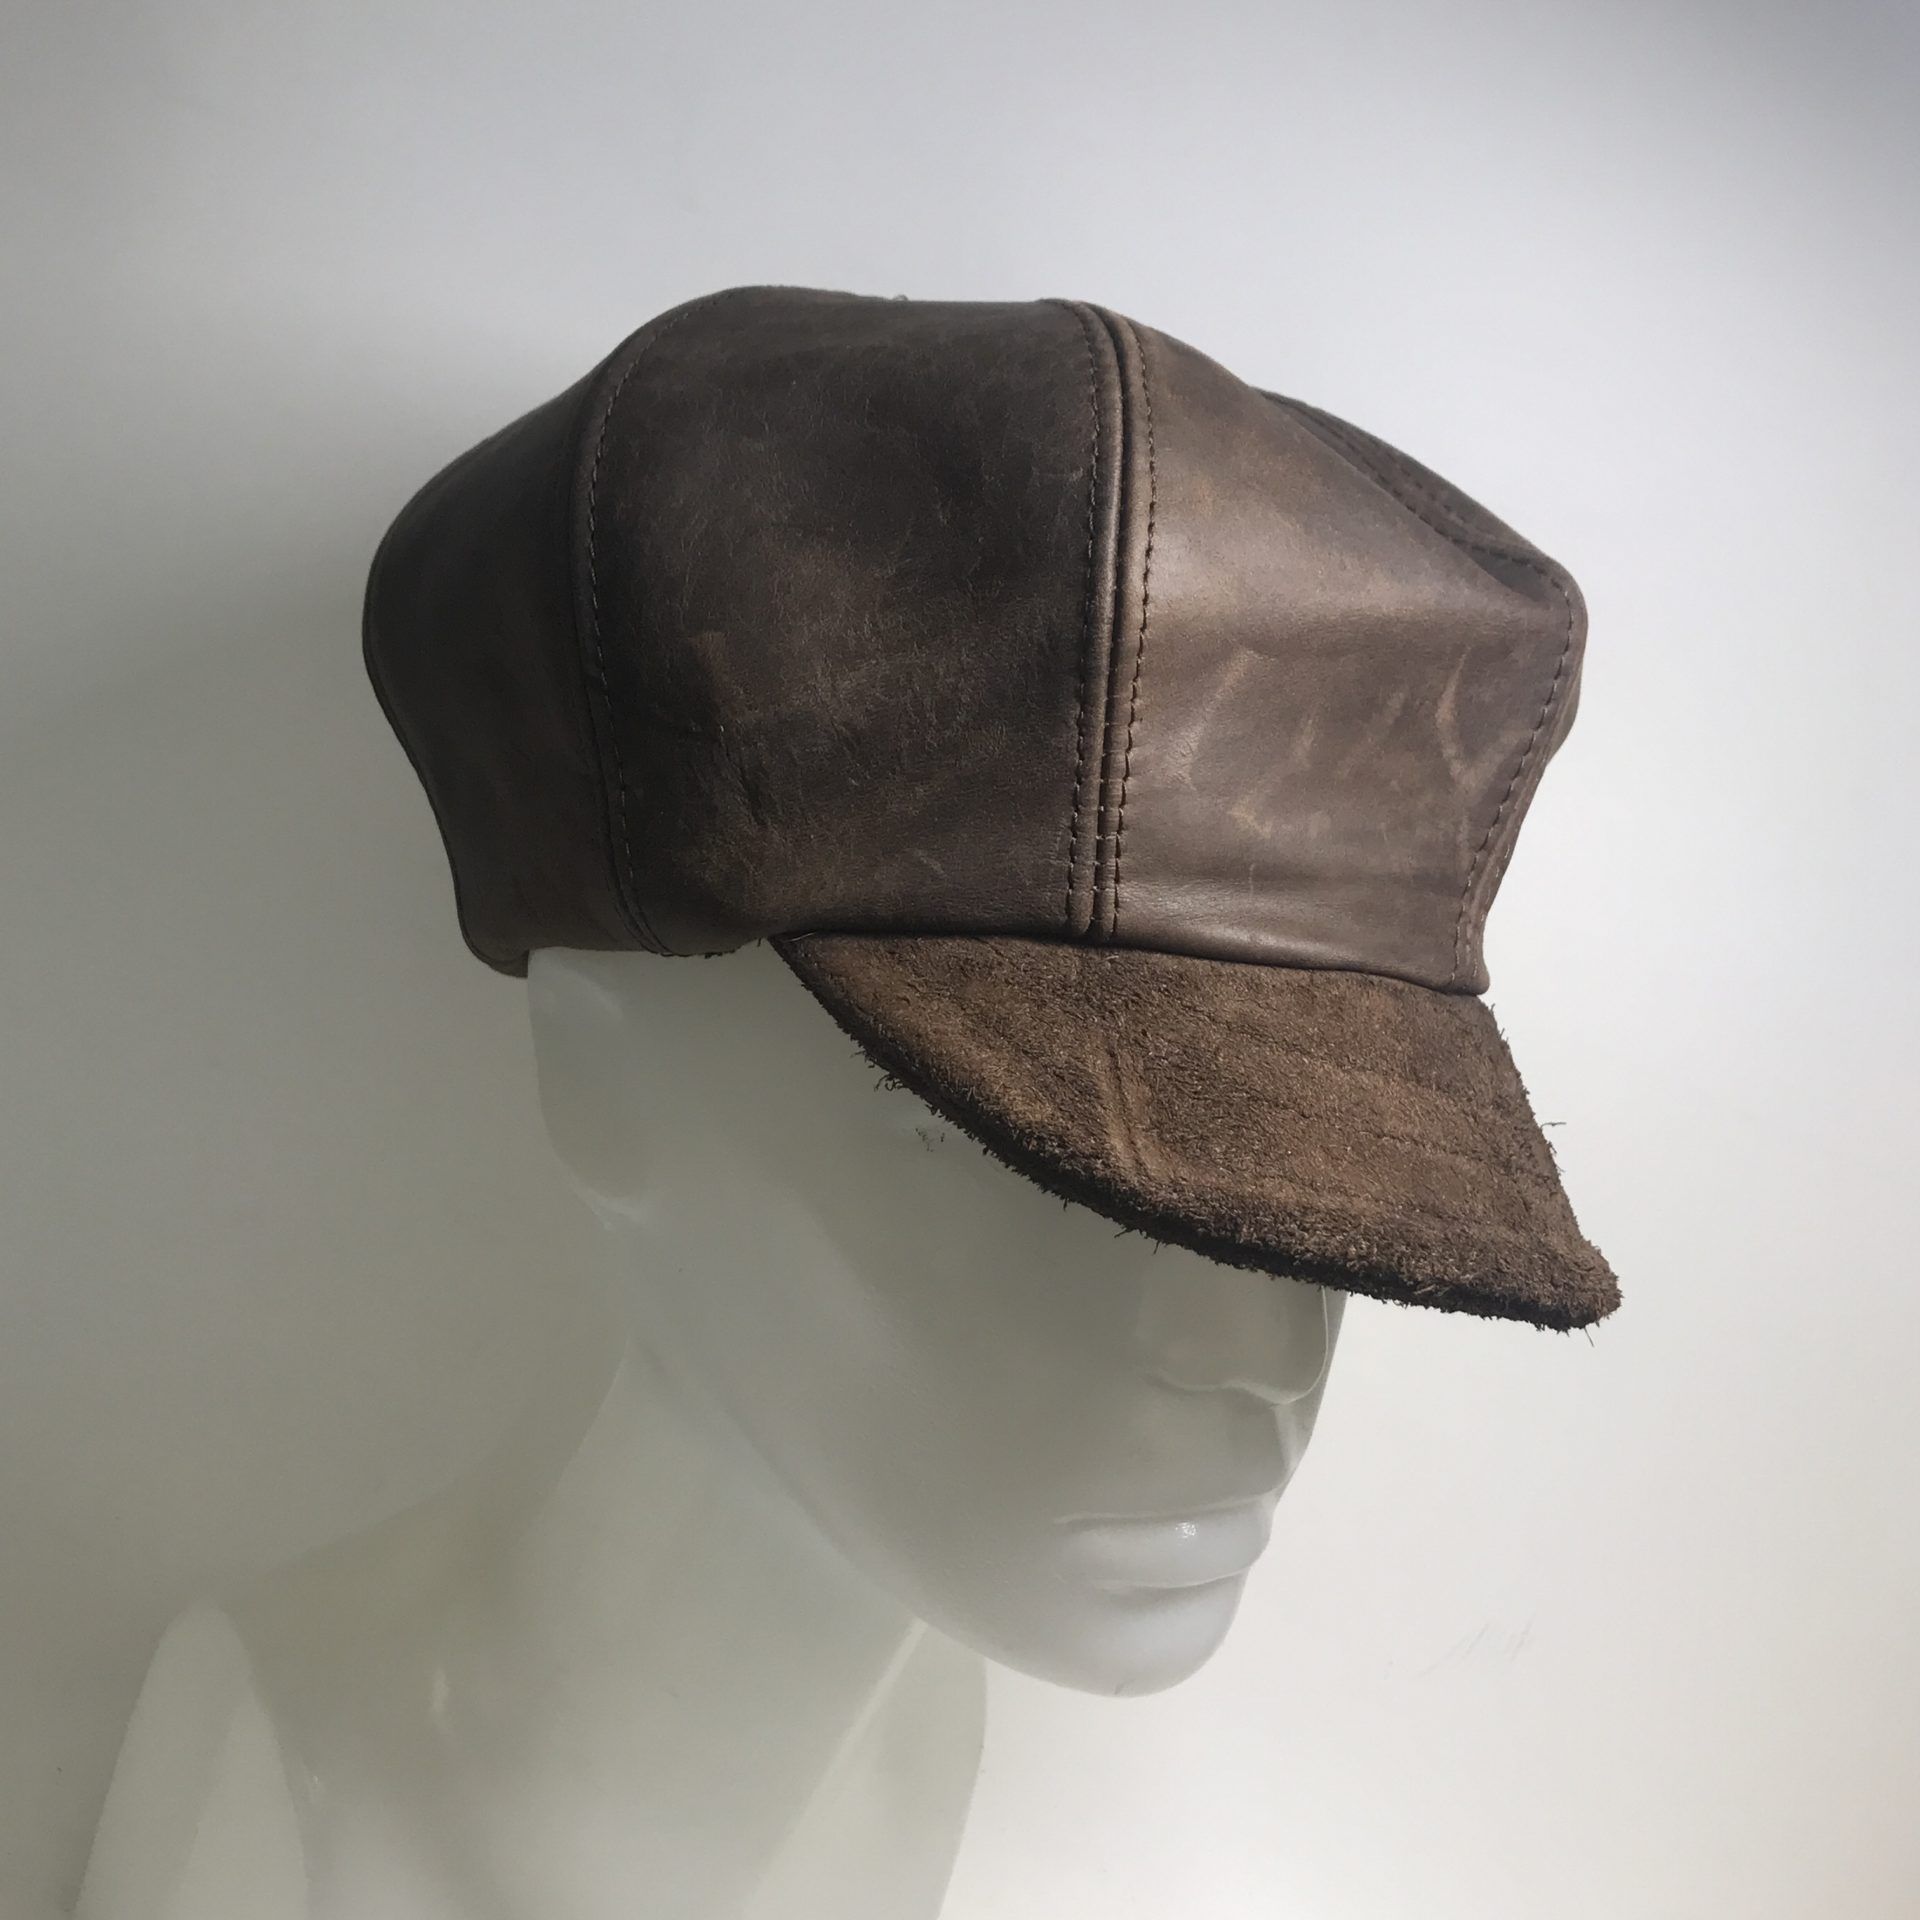 8 Piece Cap Distressed Brown Leather/Suede Peak Brown – Medium 56/57cm